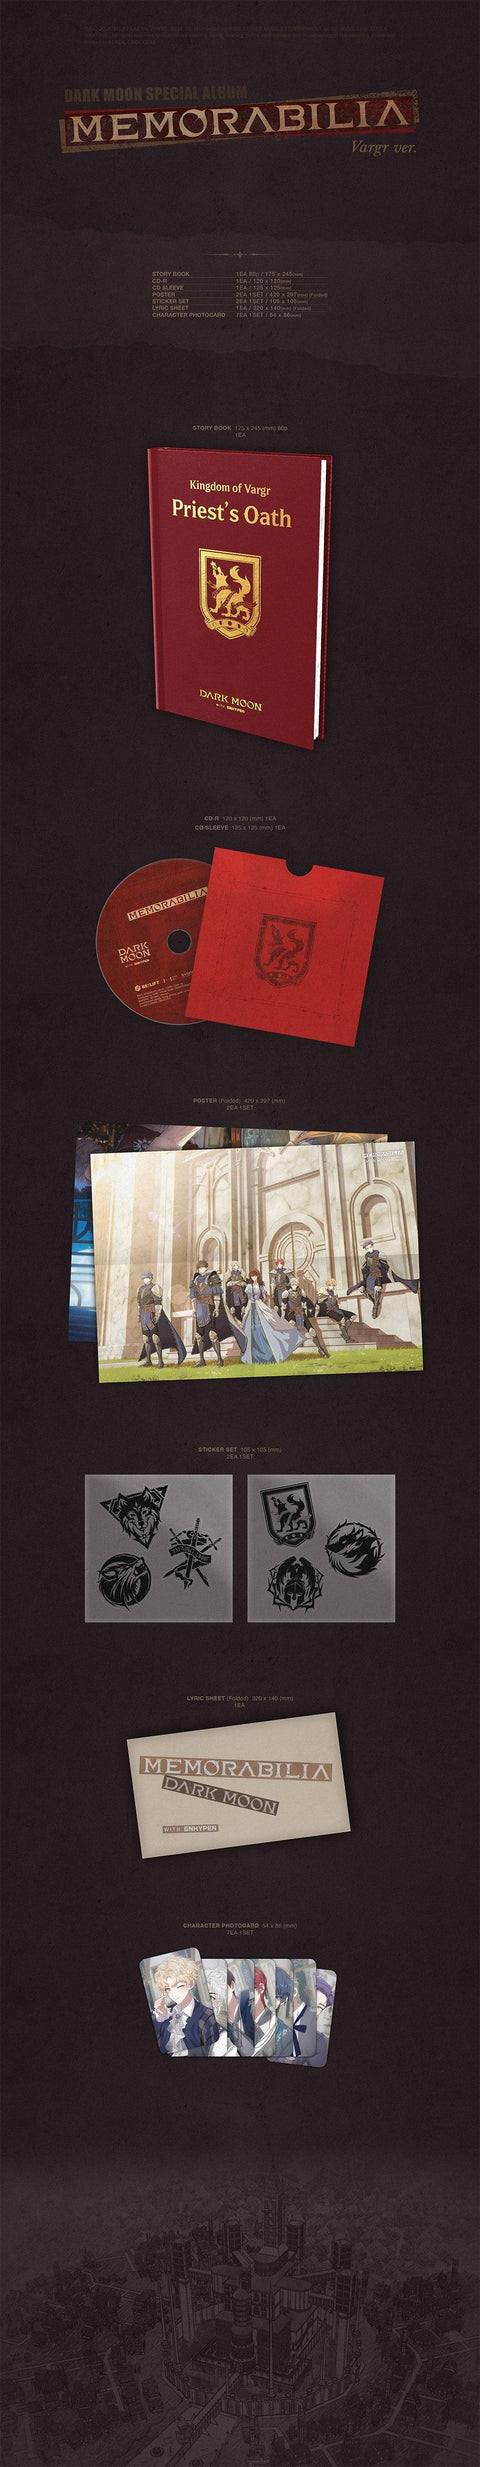 ENHYPEN DARK MOON SPECIAL ALBUM - MEMORABILIA + APPLEMUSIC PHOTOCARD - Pig Rabbit Shop Kpop store Spain